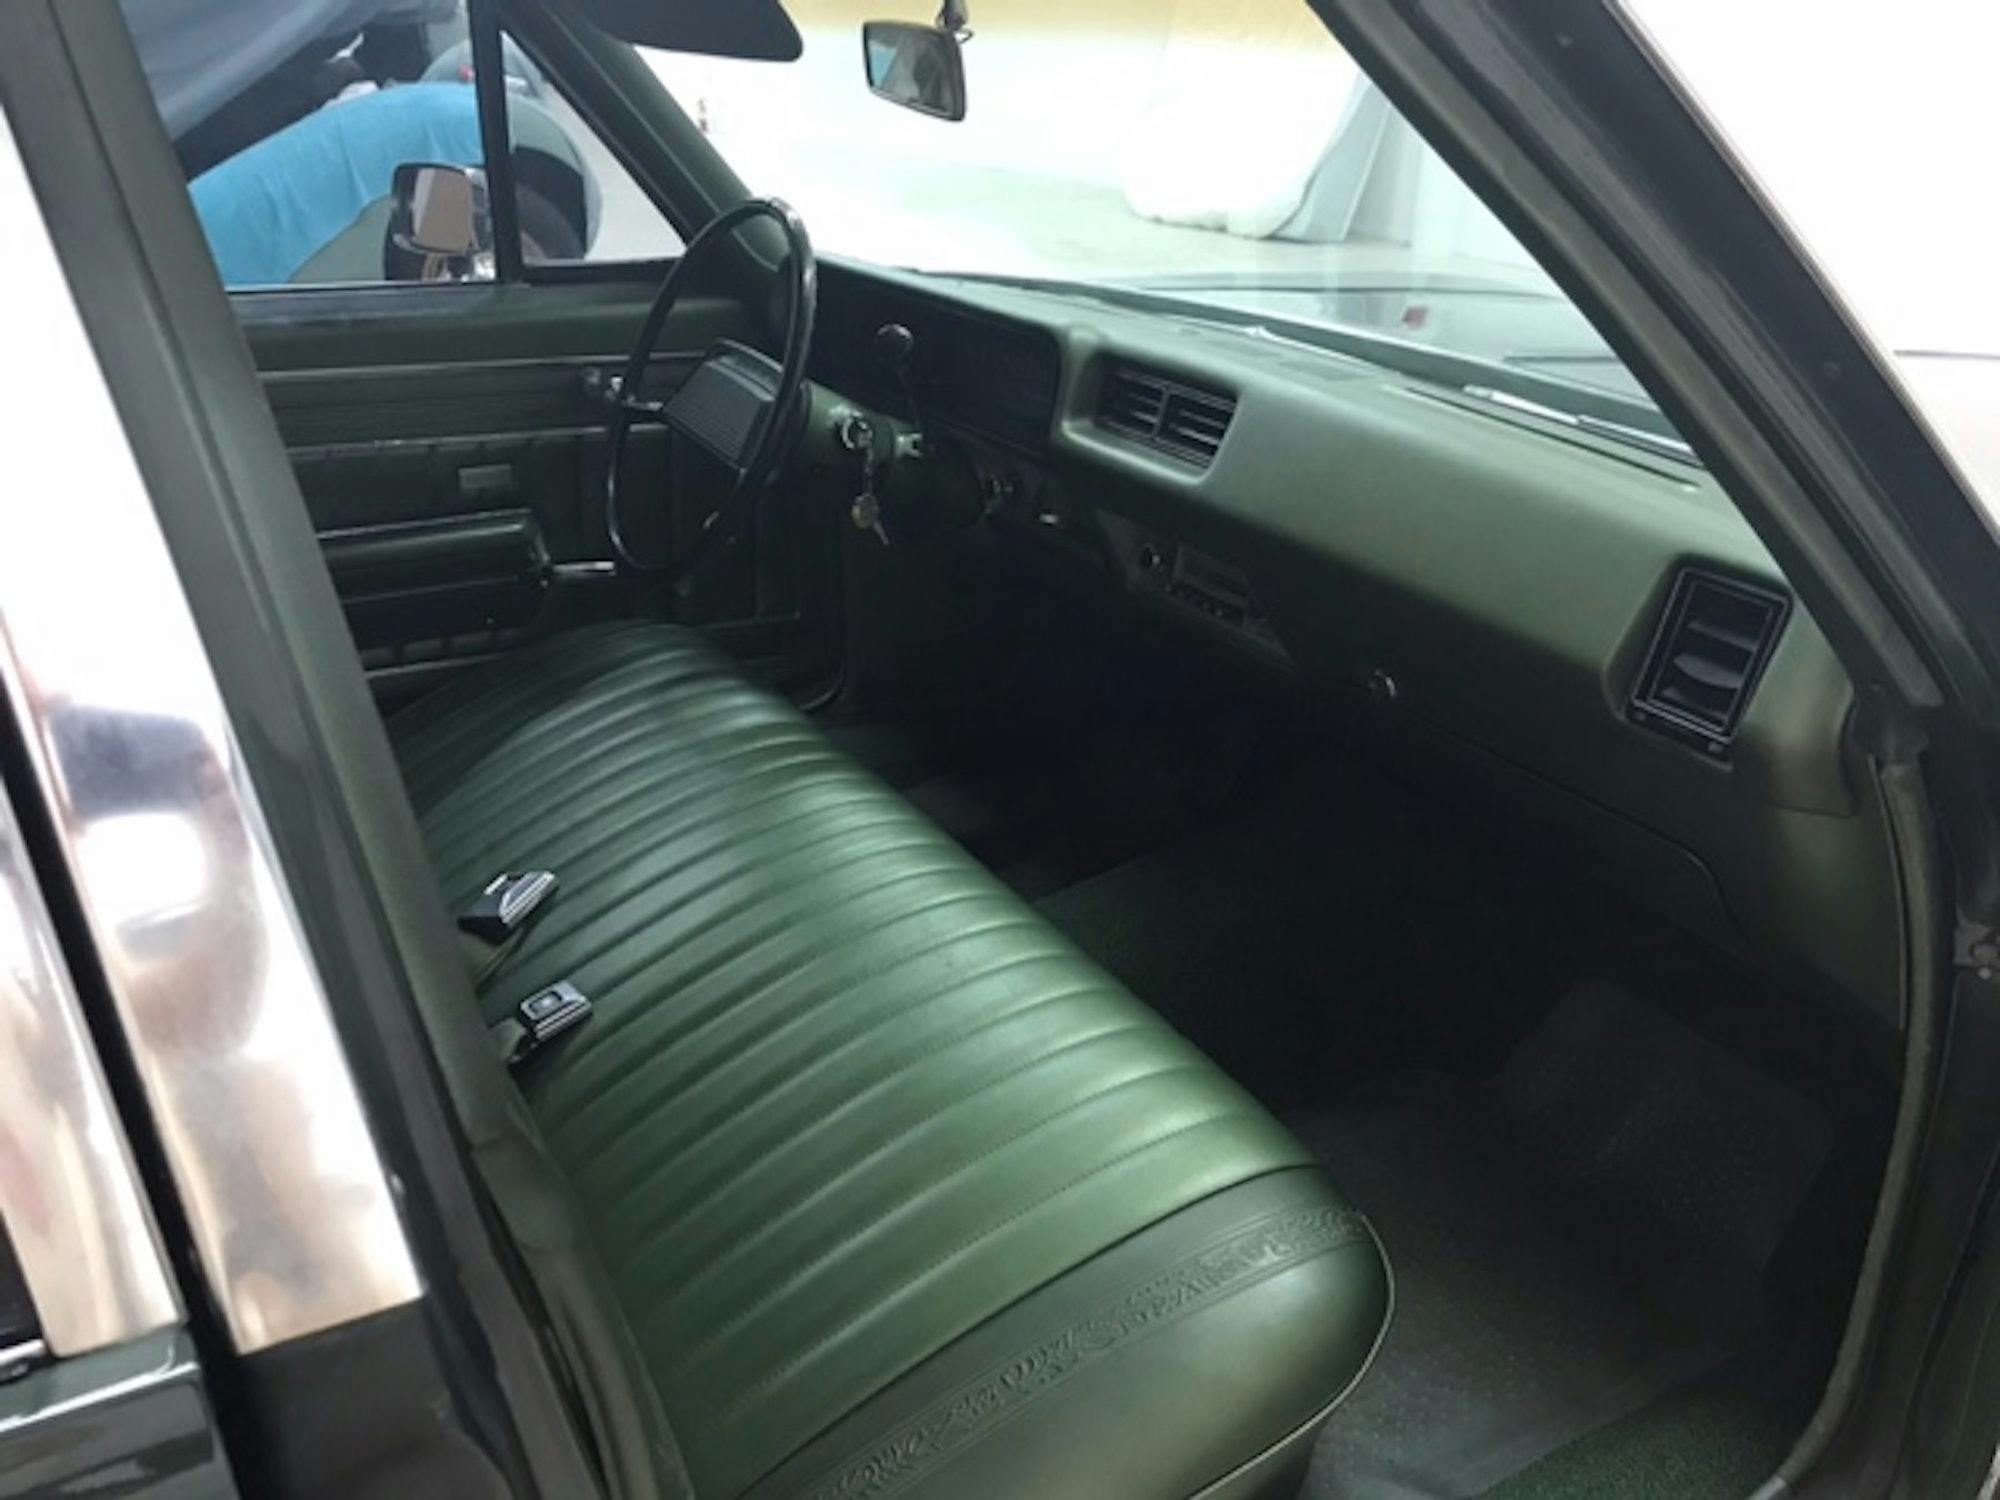 1969 Buick Sportwagon 400 wagon vintage green